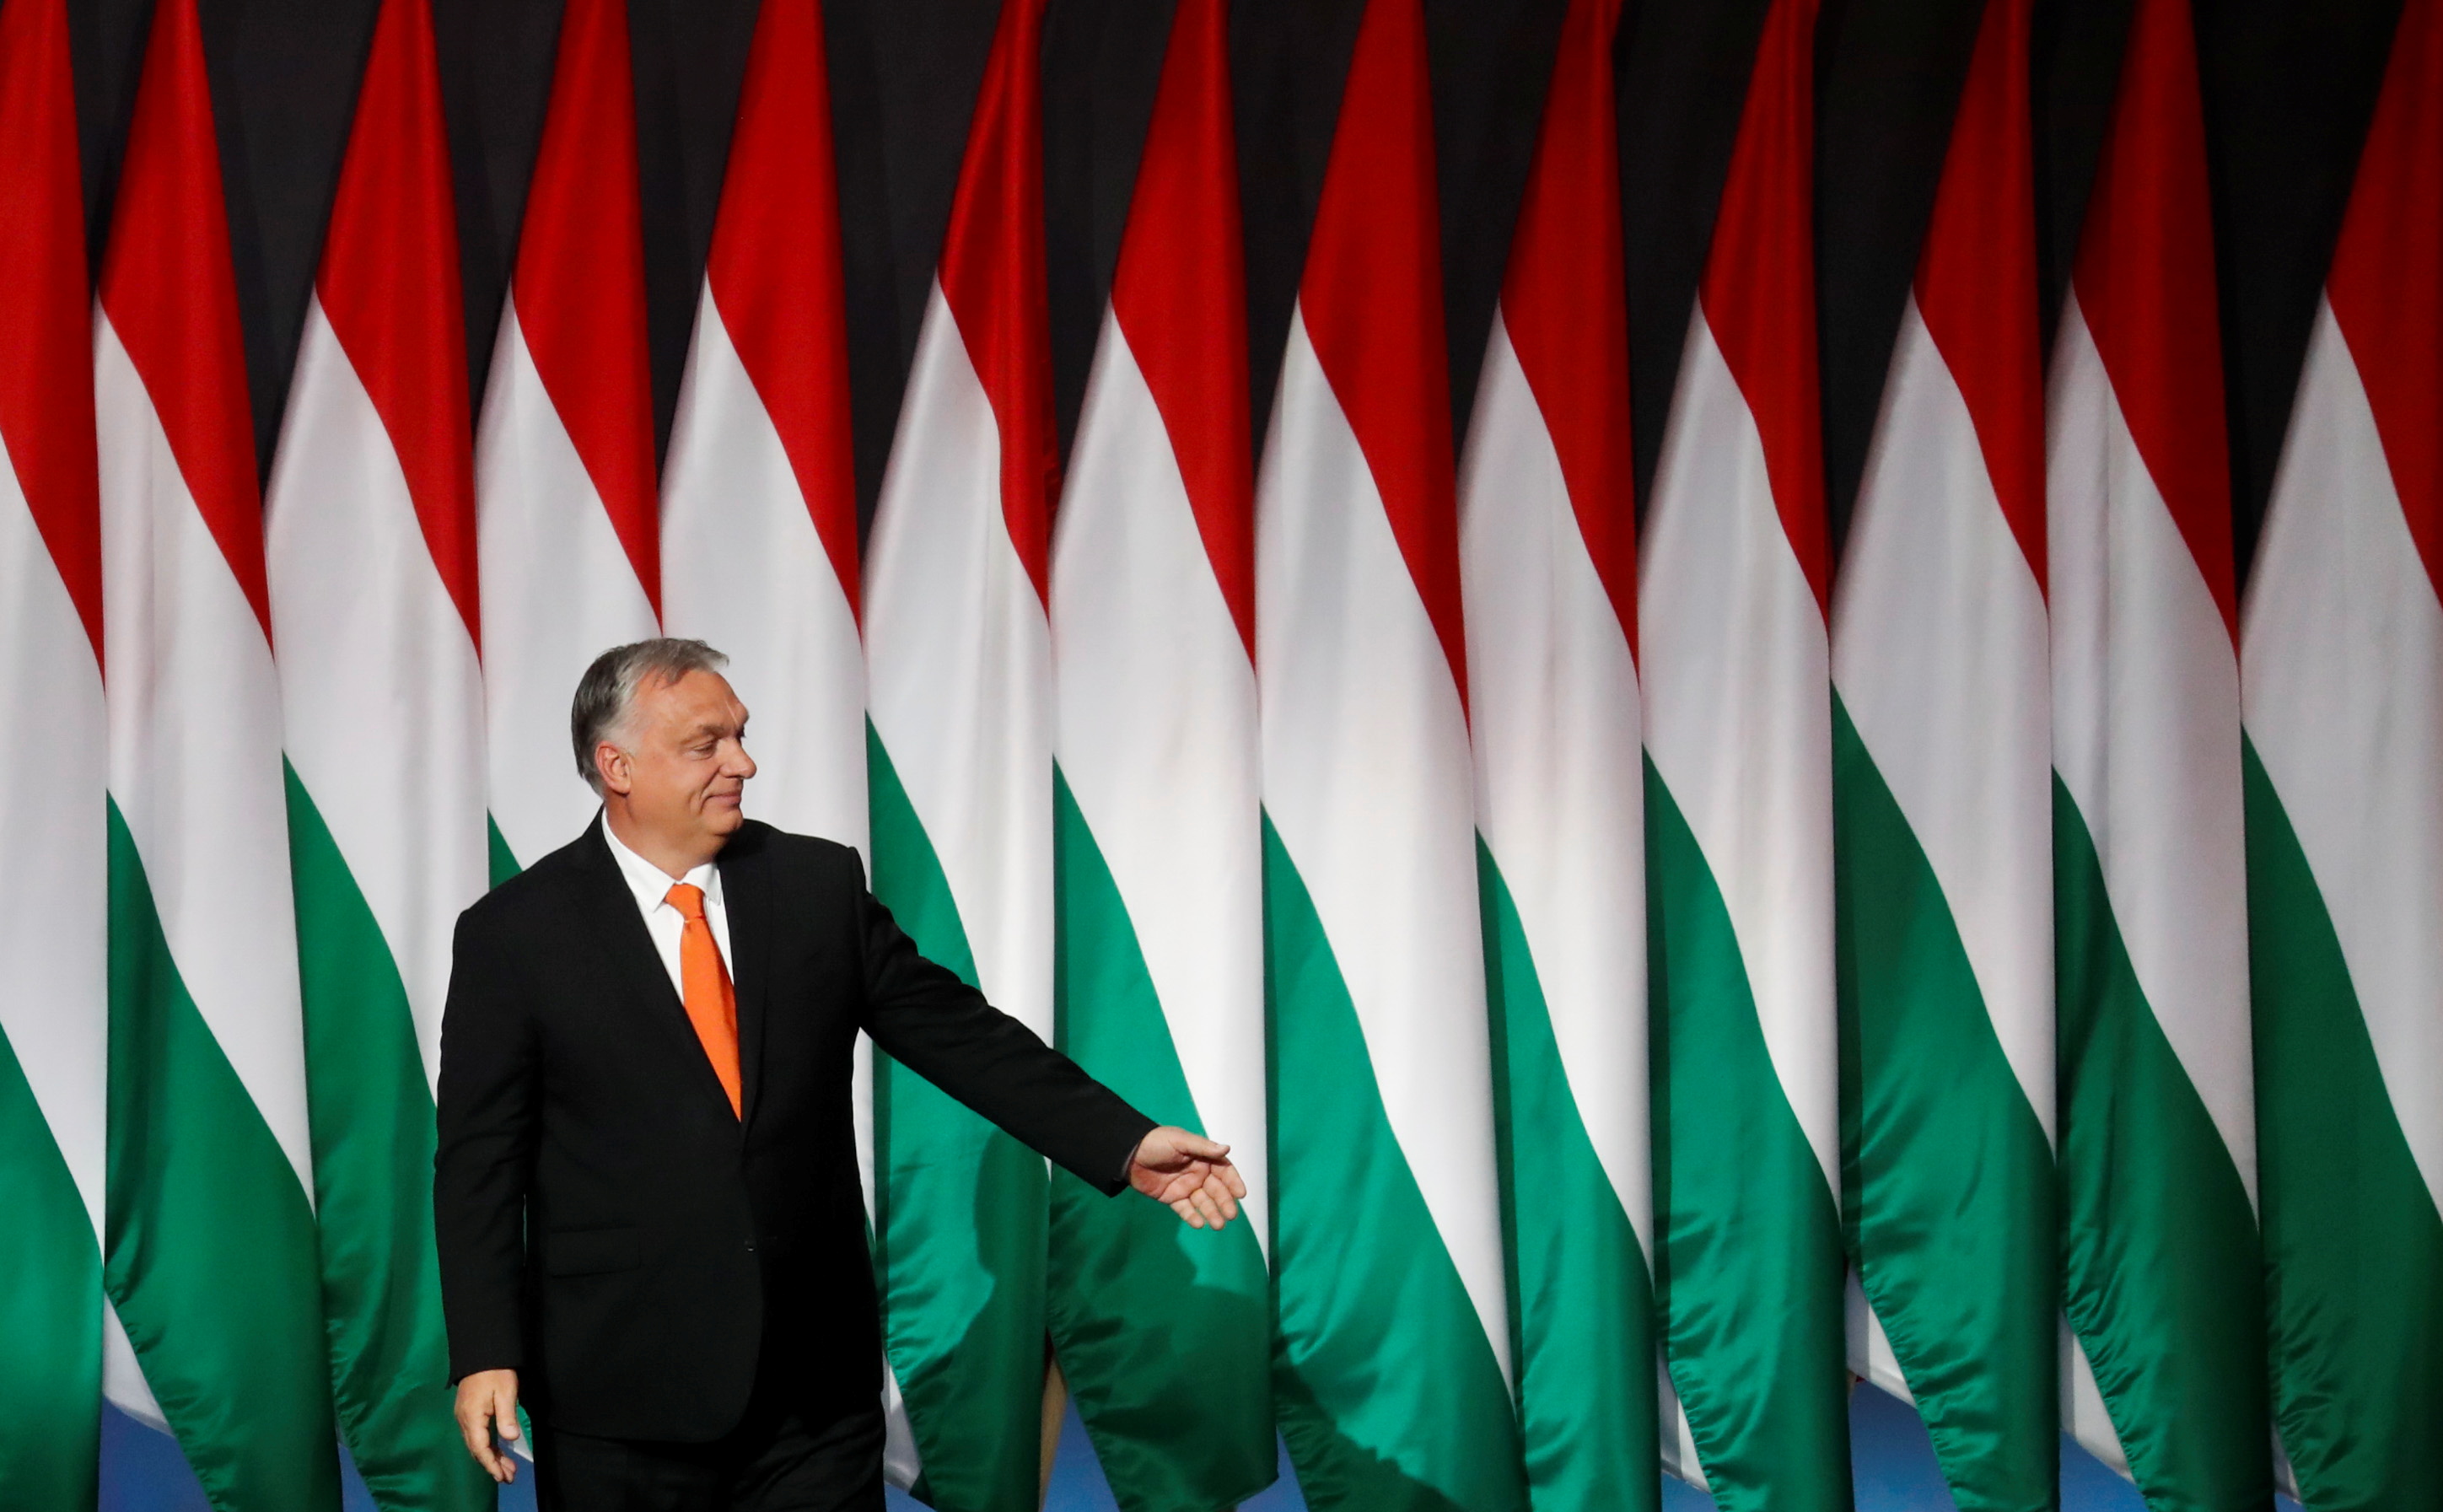 Hungarian Prime Minister Viktor Orban gestures during the Fidesz party congress in Budapest, Hungary, November 14, 2021. REUTERS/Bernadett Szabo